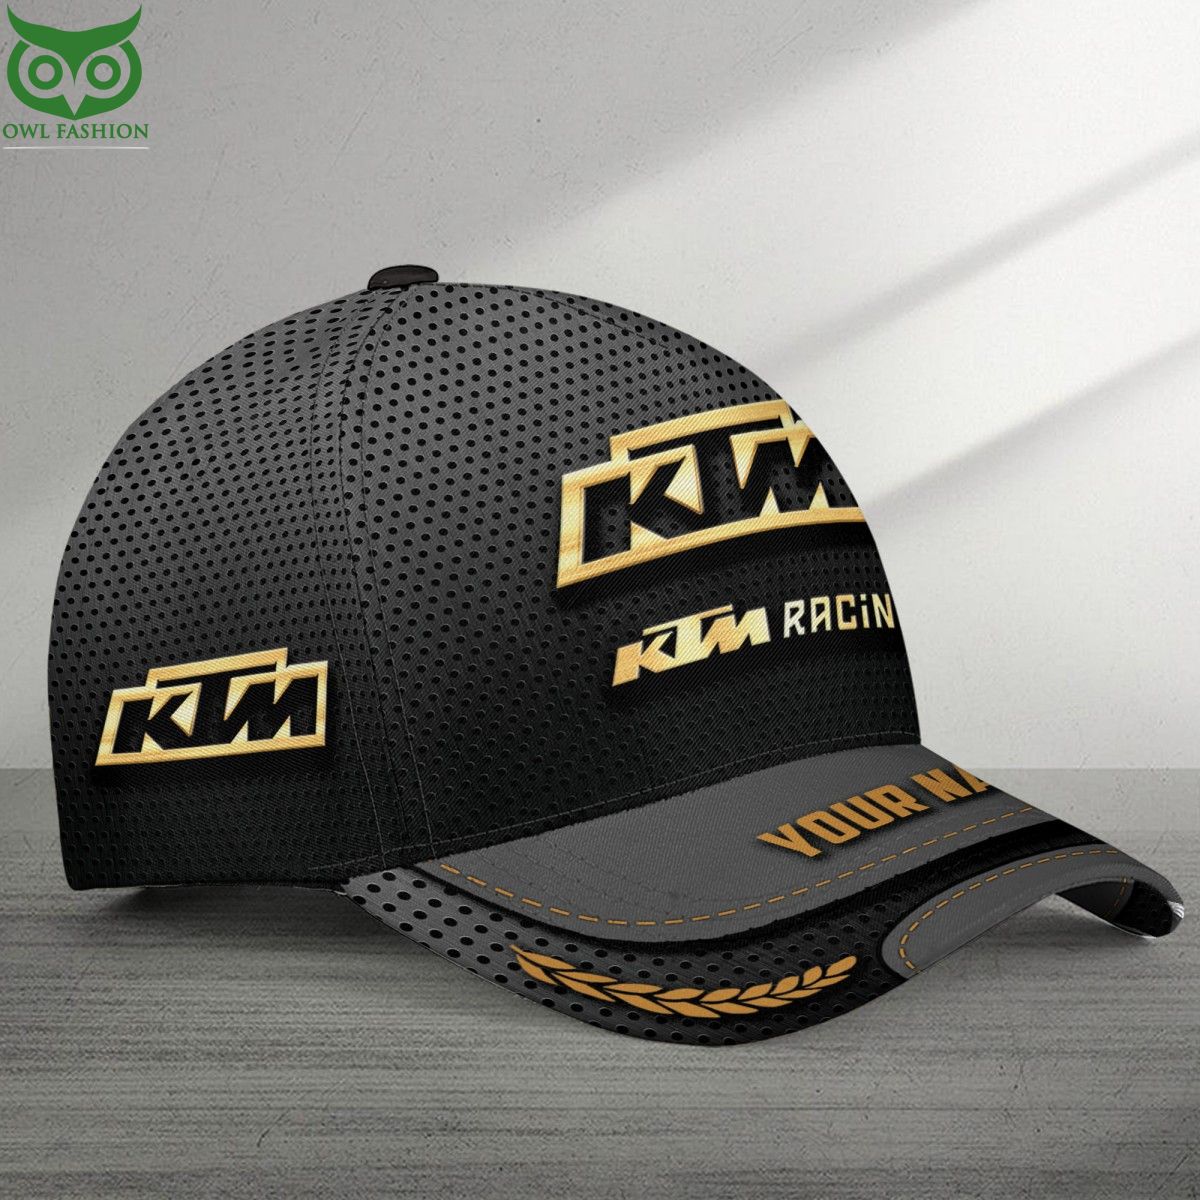 KTM Racing Motor Design New Classic Cap Nice shot bro